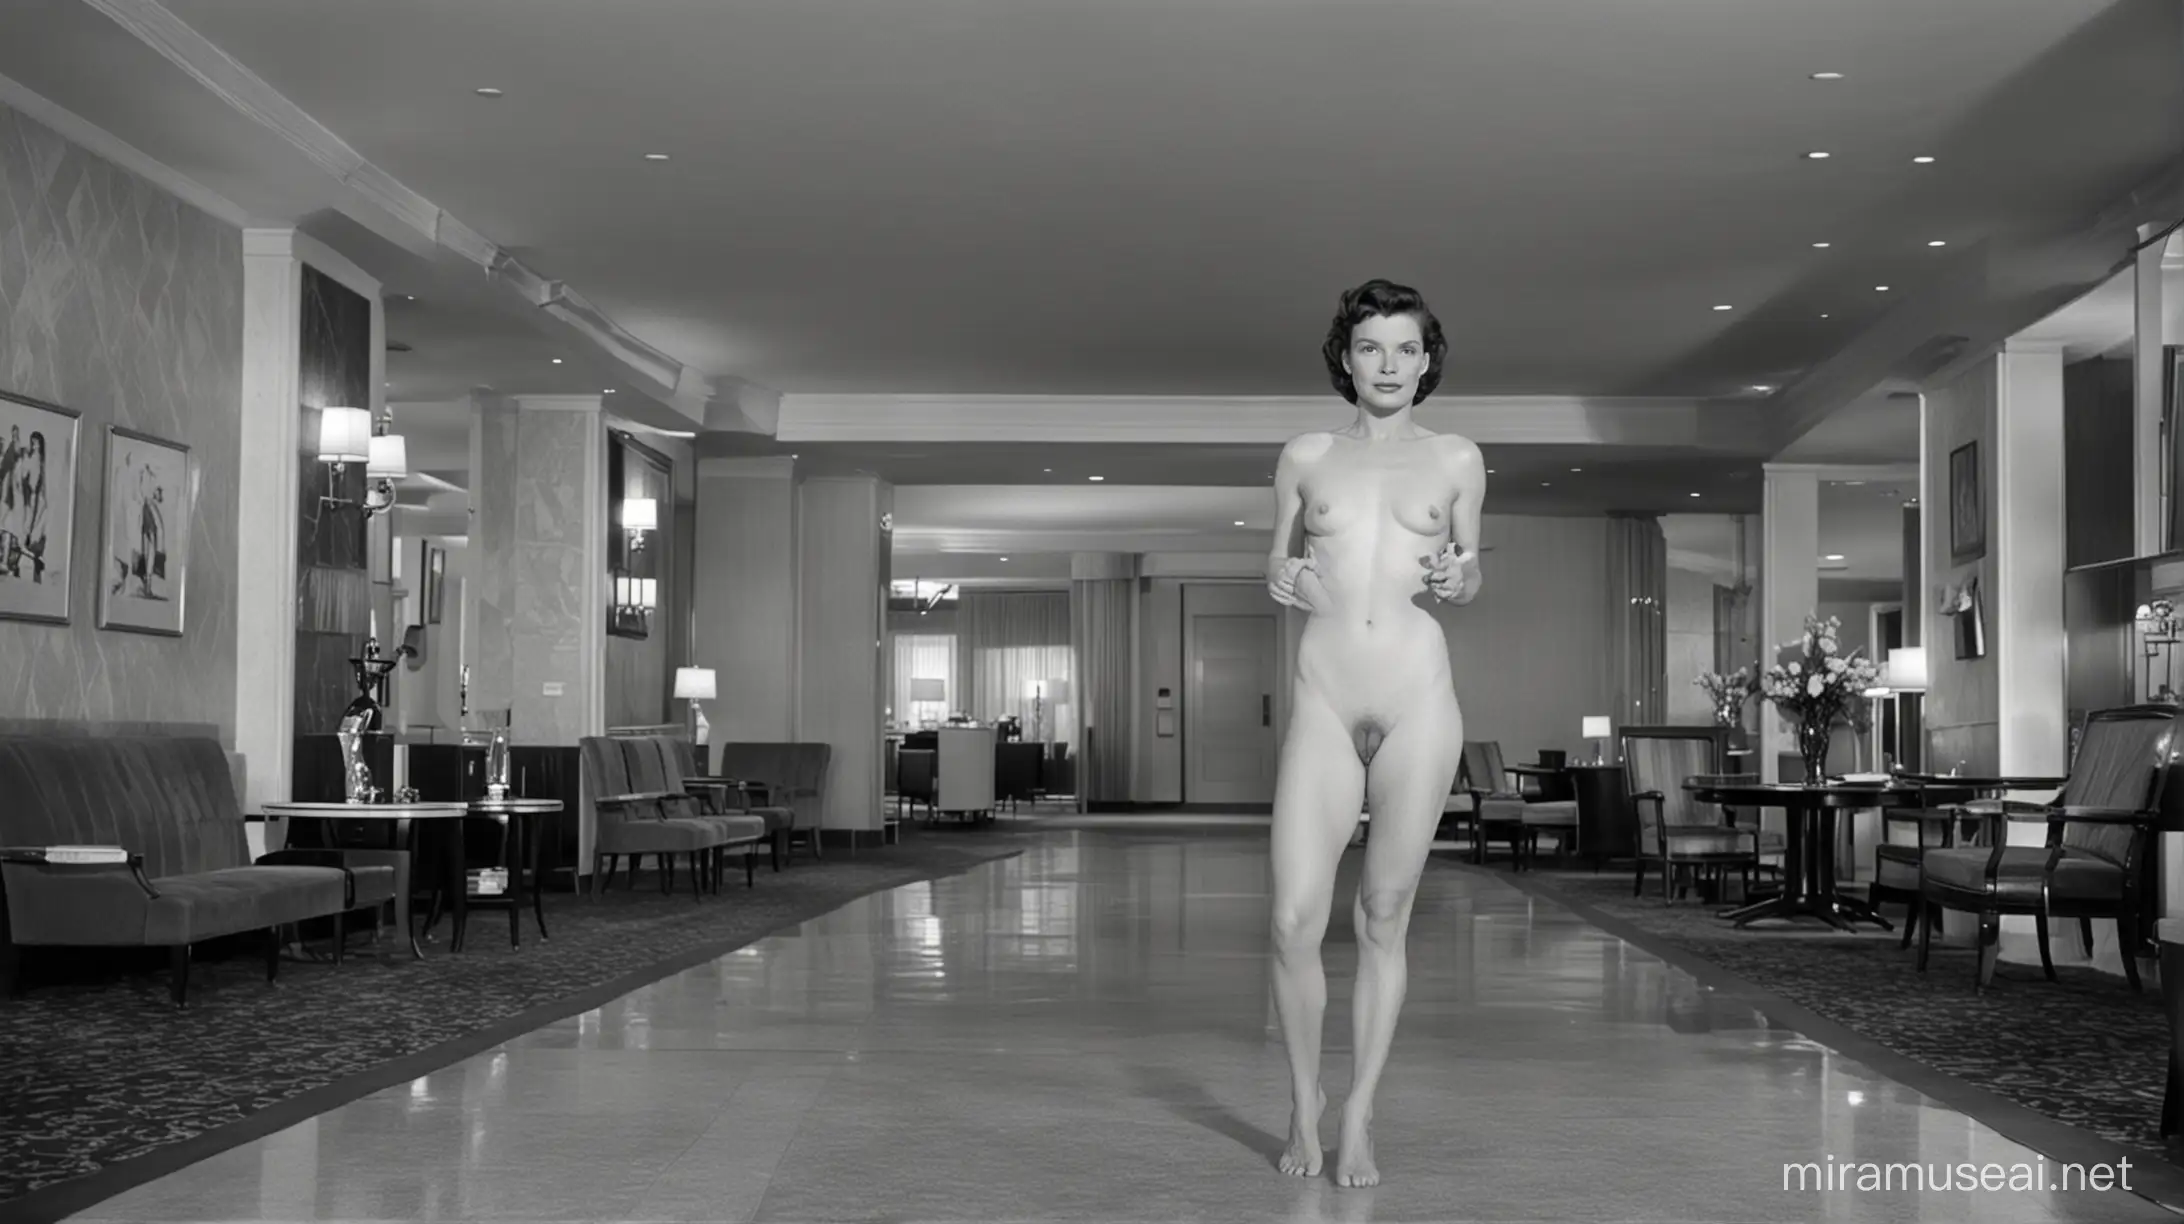 Nude Katharine Hepburn in 1950s Hollywood Hotel Lobby